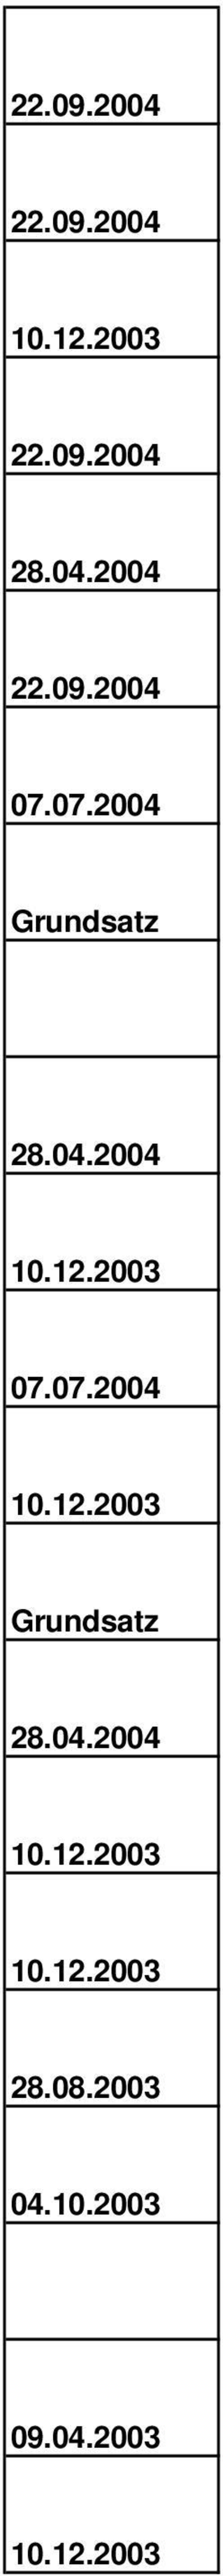 07.2004 Grundsatz 28.04.2004 07.07.2004 Grundsatz 28.04.2004 28.